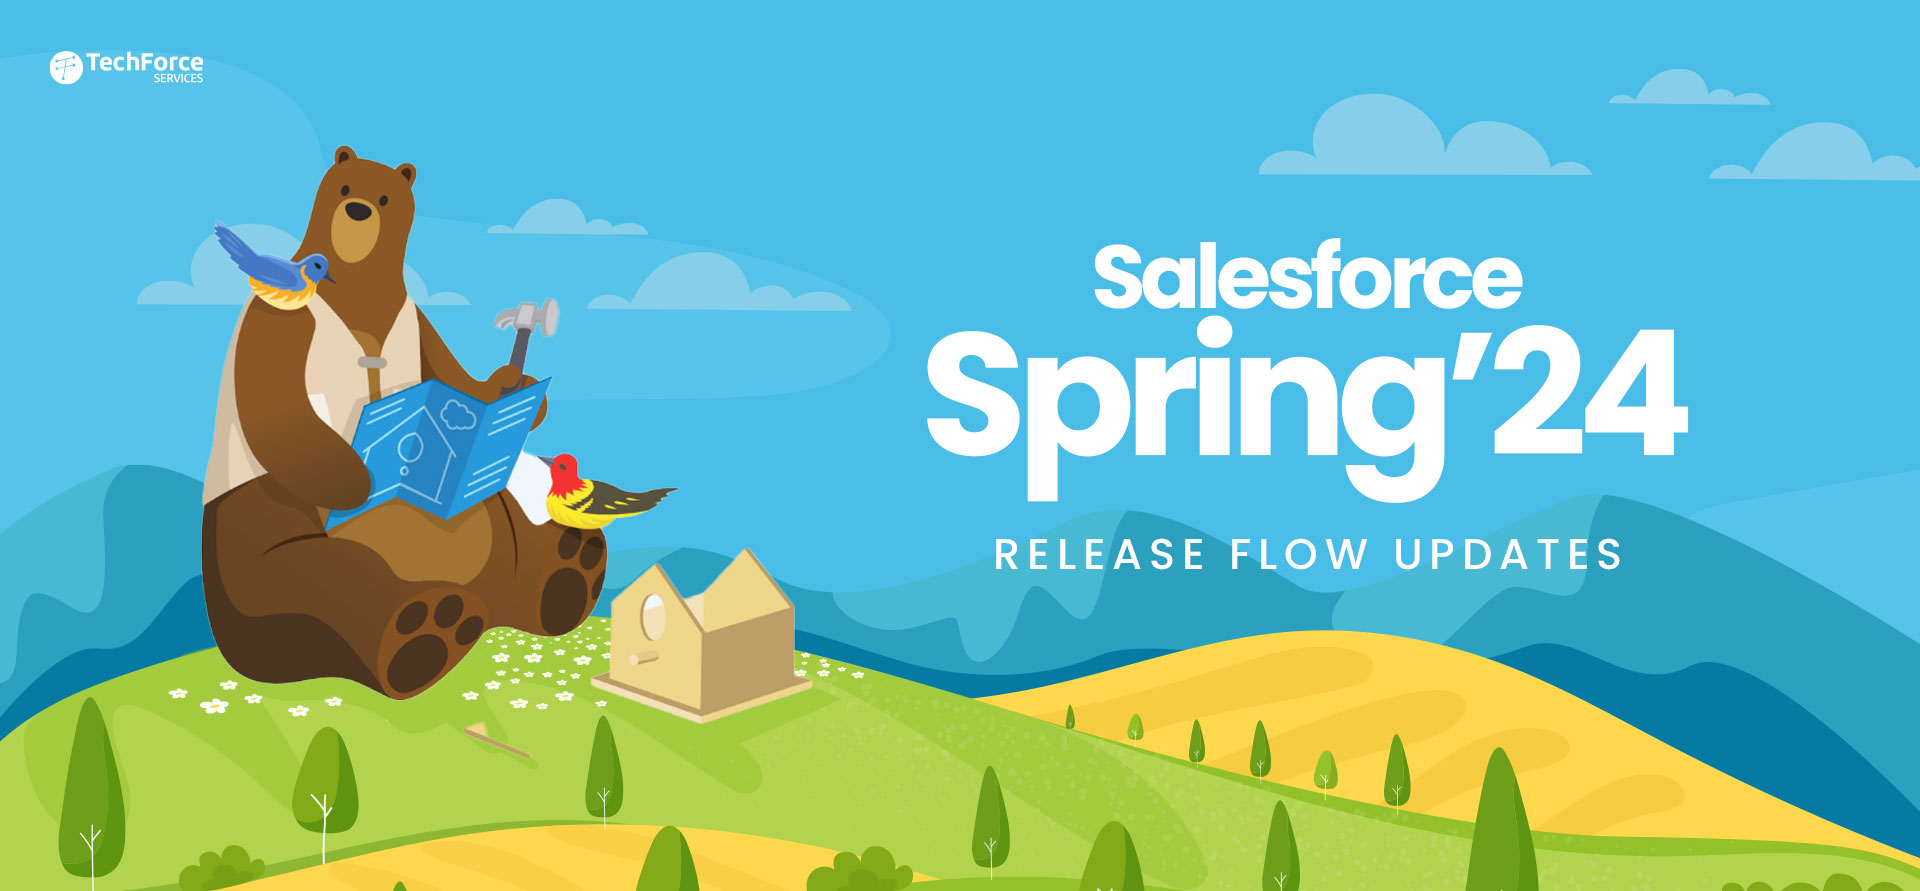 Salesforce-Spring24-Release-Flow-Updates